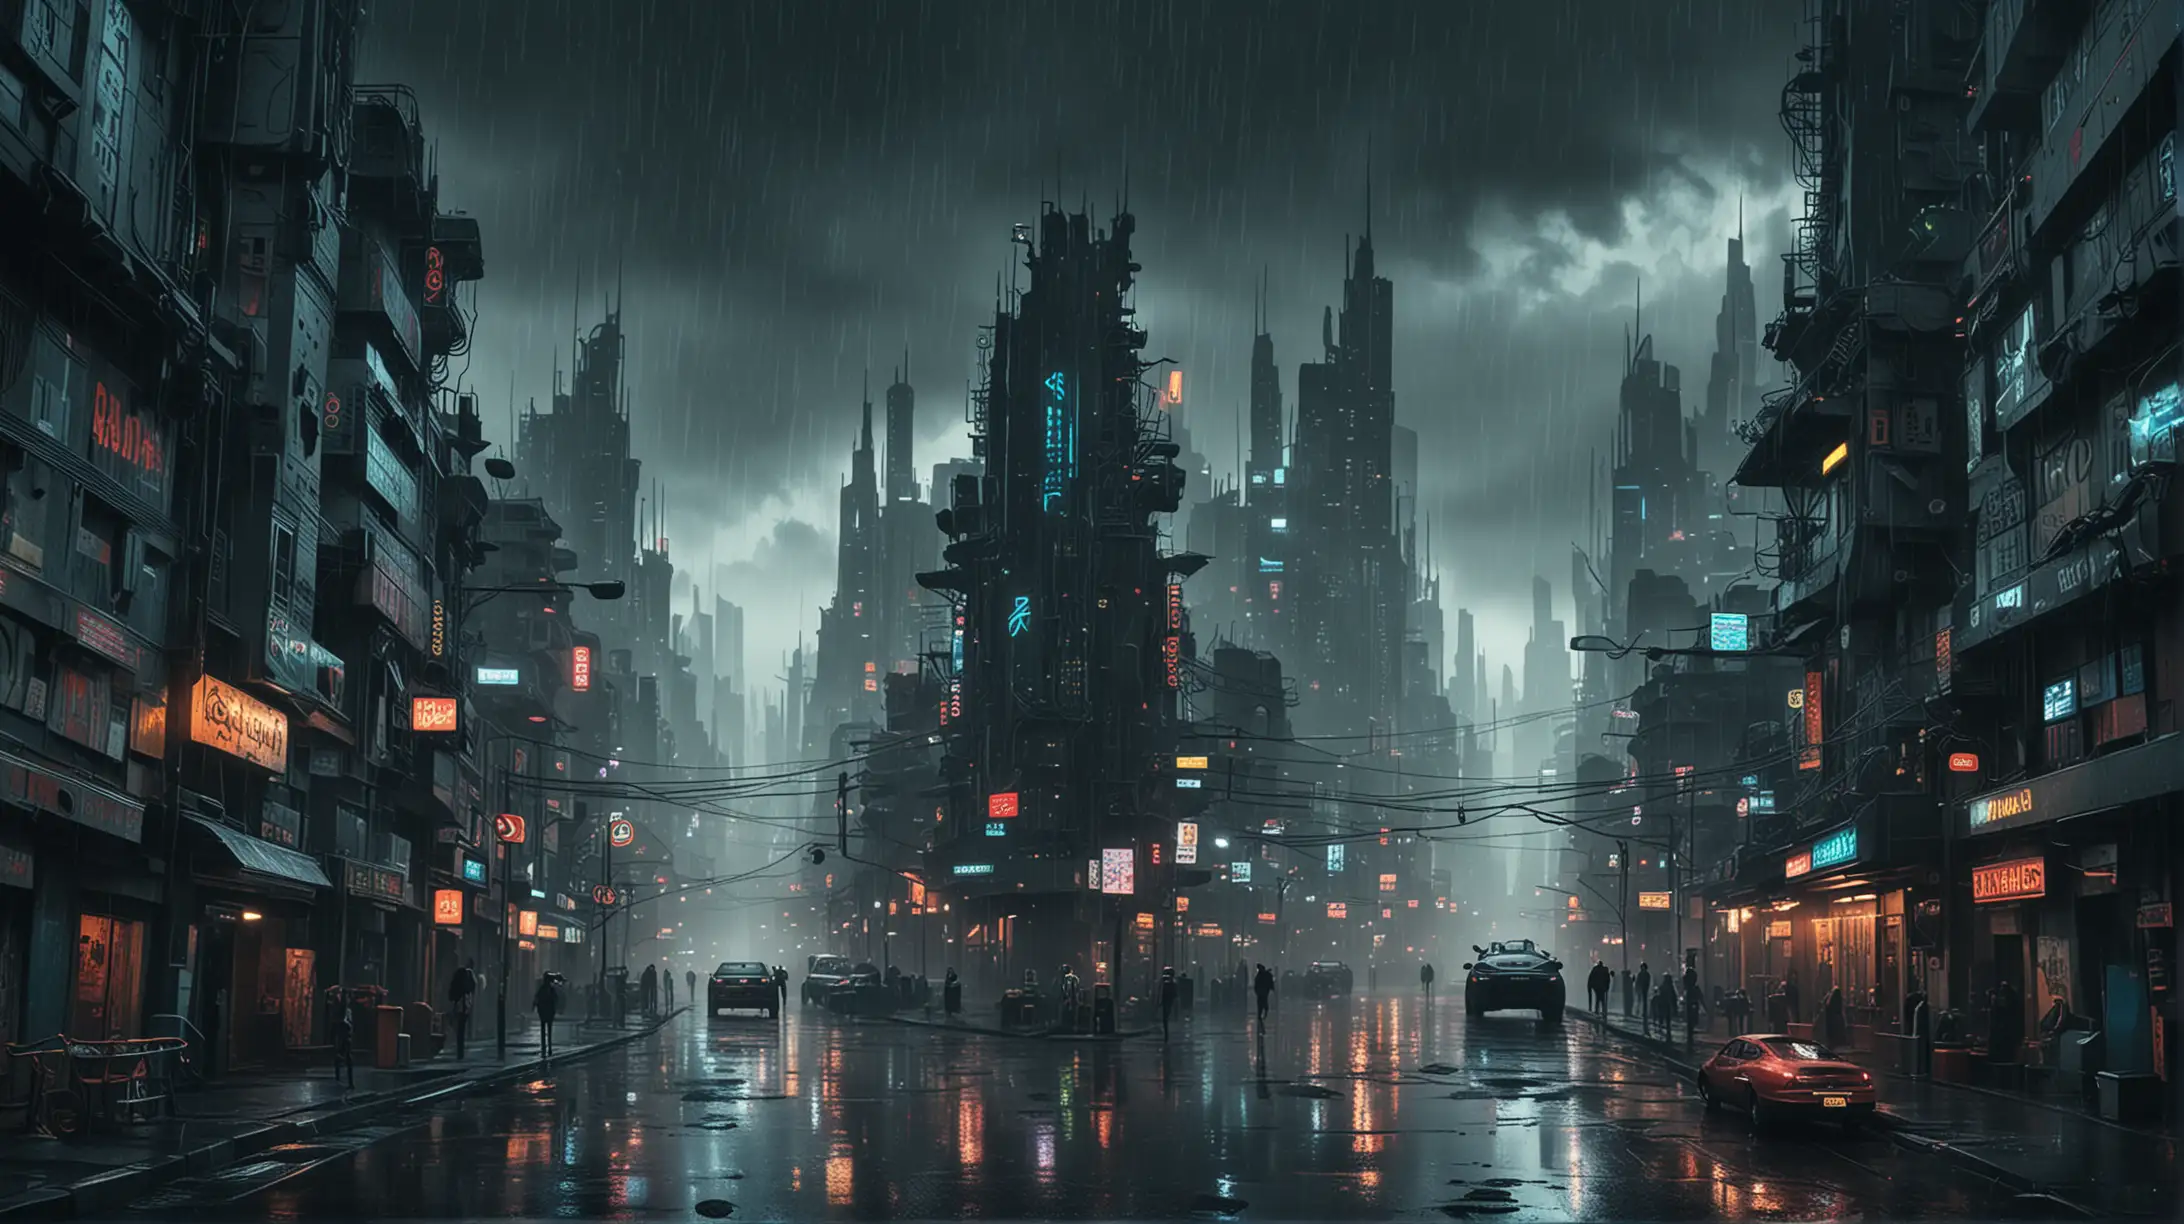 the psychodelic cityscape of a futuristic city, completely dark, light fog and rain